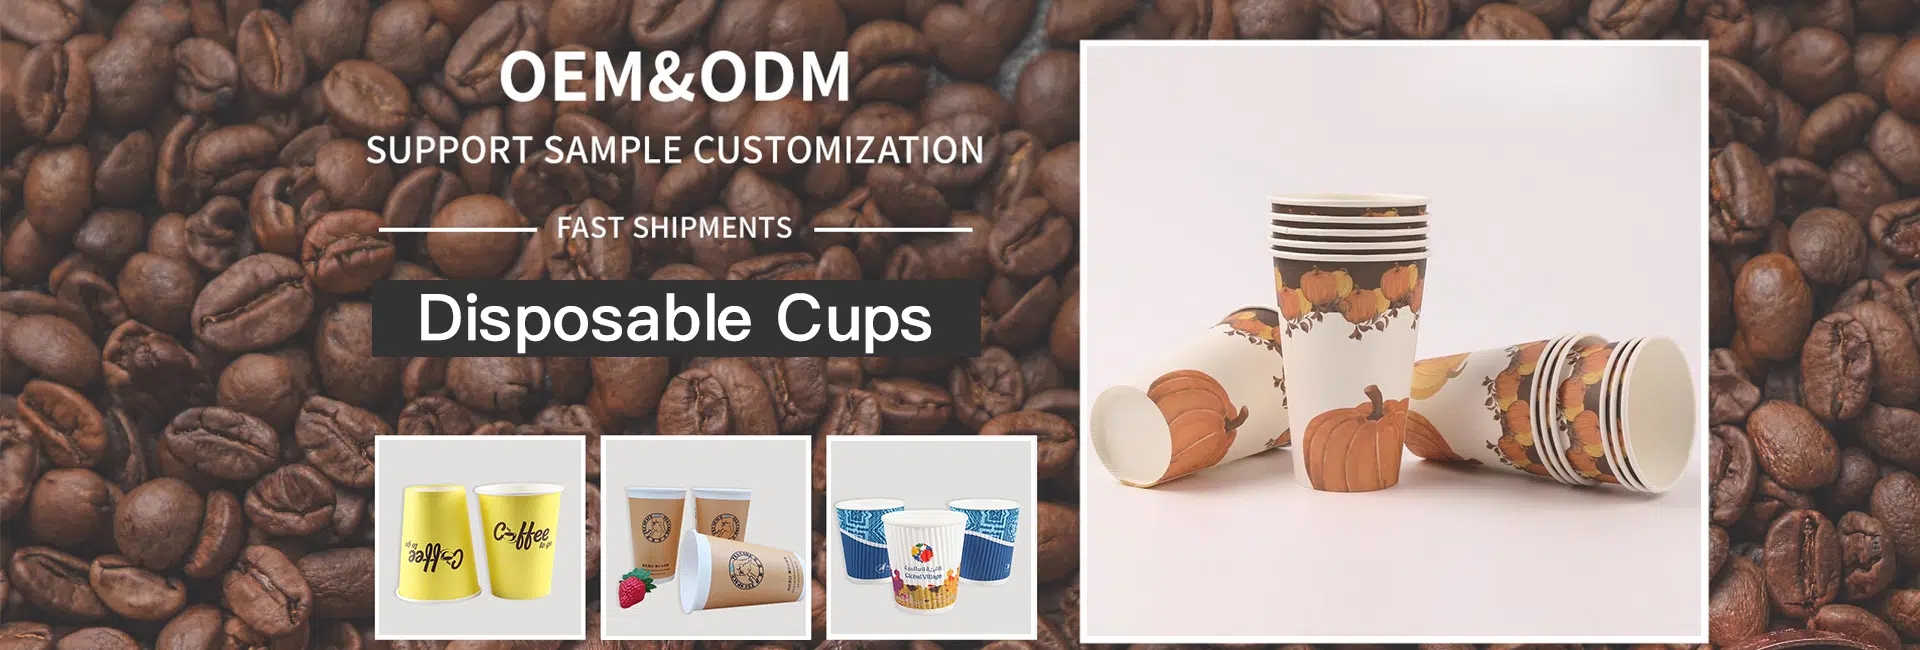 disposable-cups-1.jpg.webp